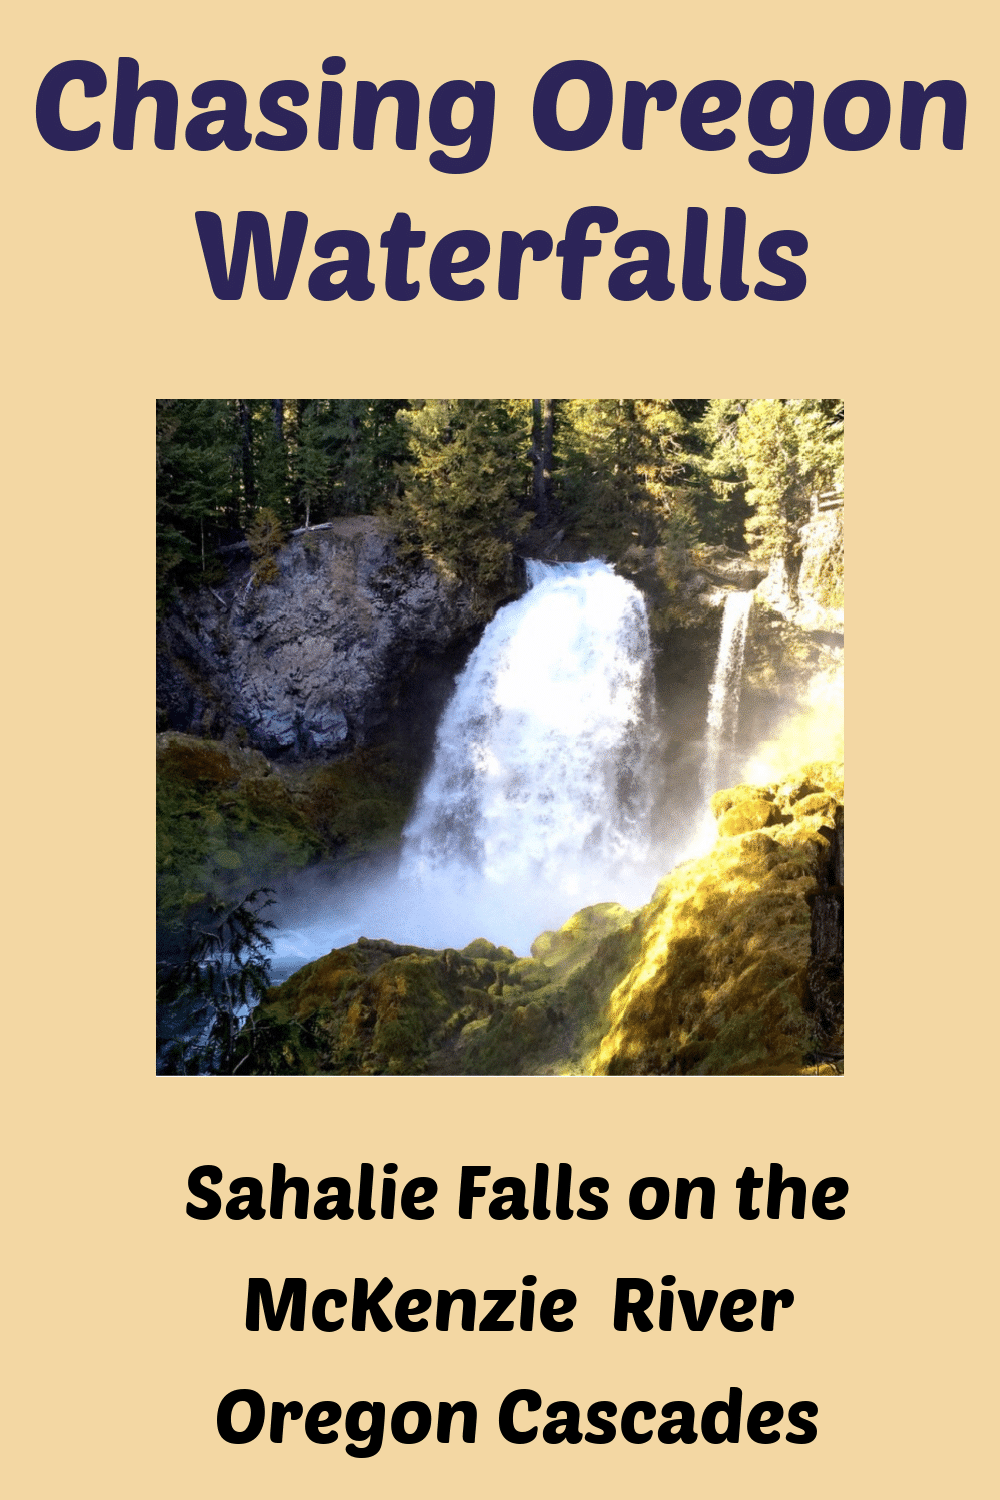 Pinterest Pin for chasing waterfalls and Sahalie Falls